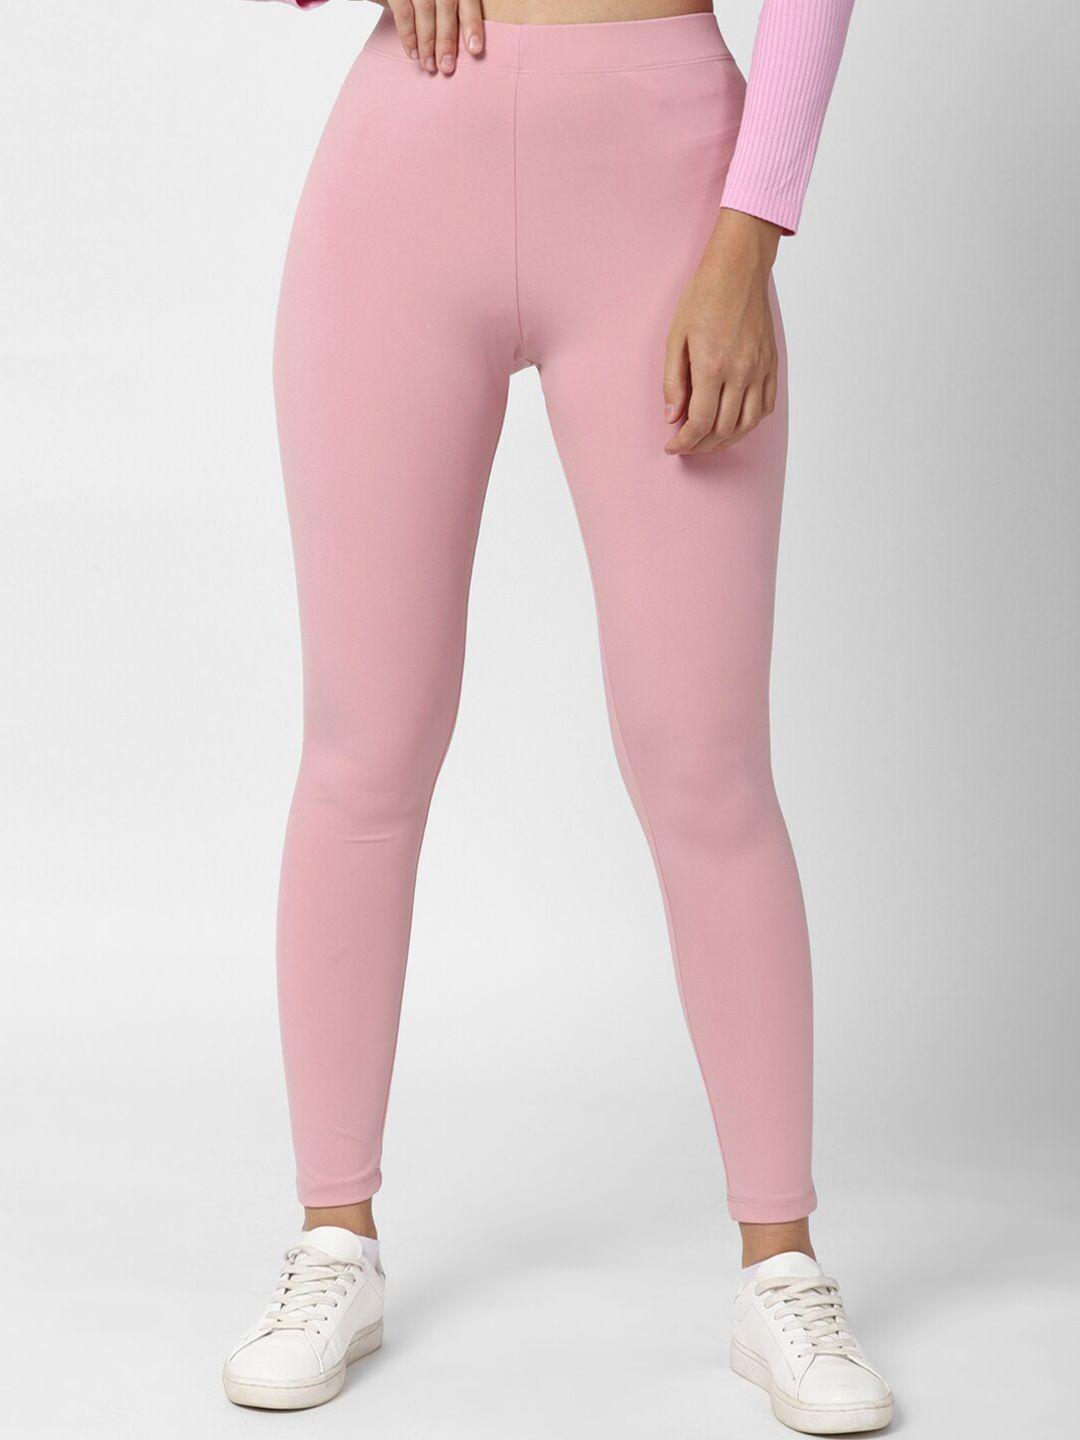 forever-21-women-pink-solid-ankle-length-leggings